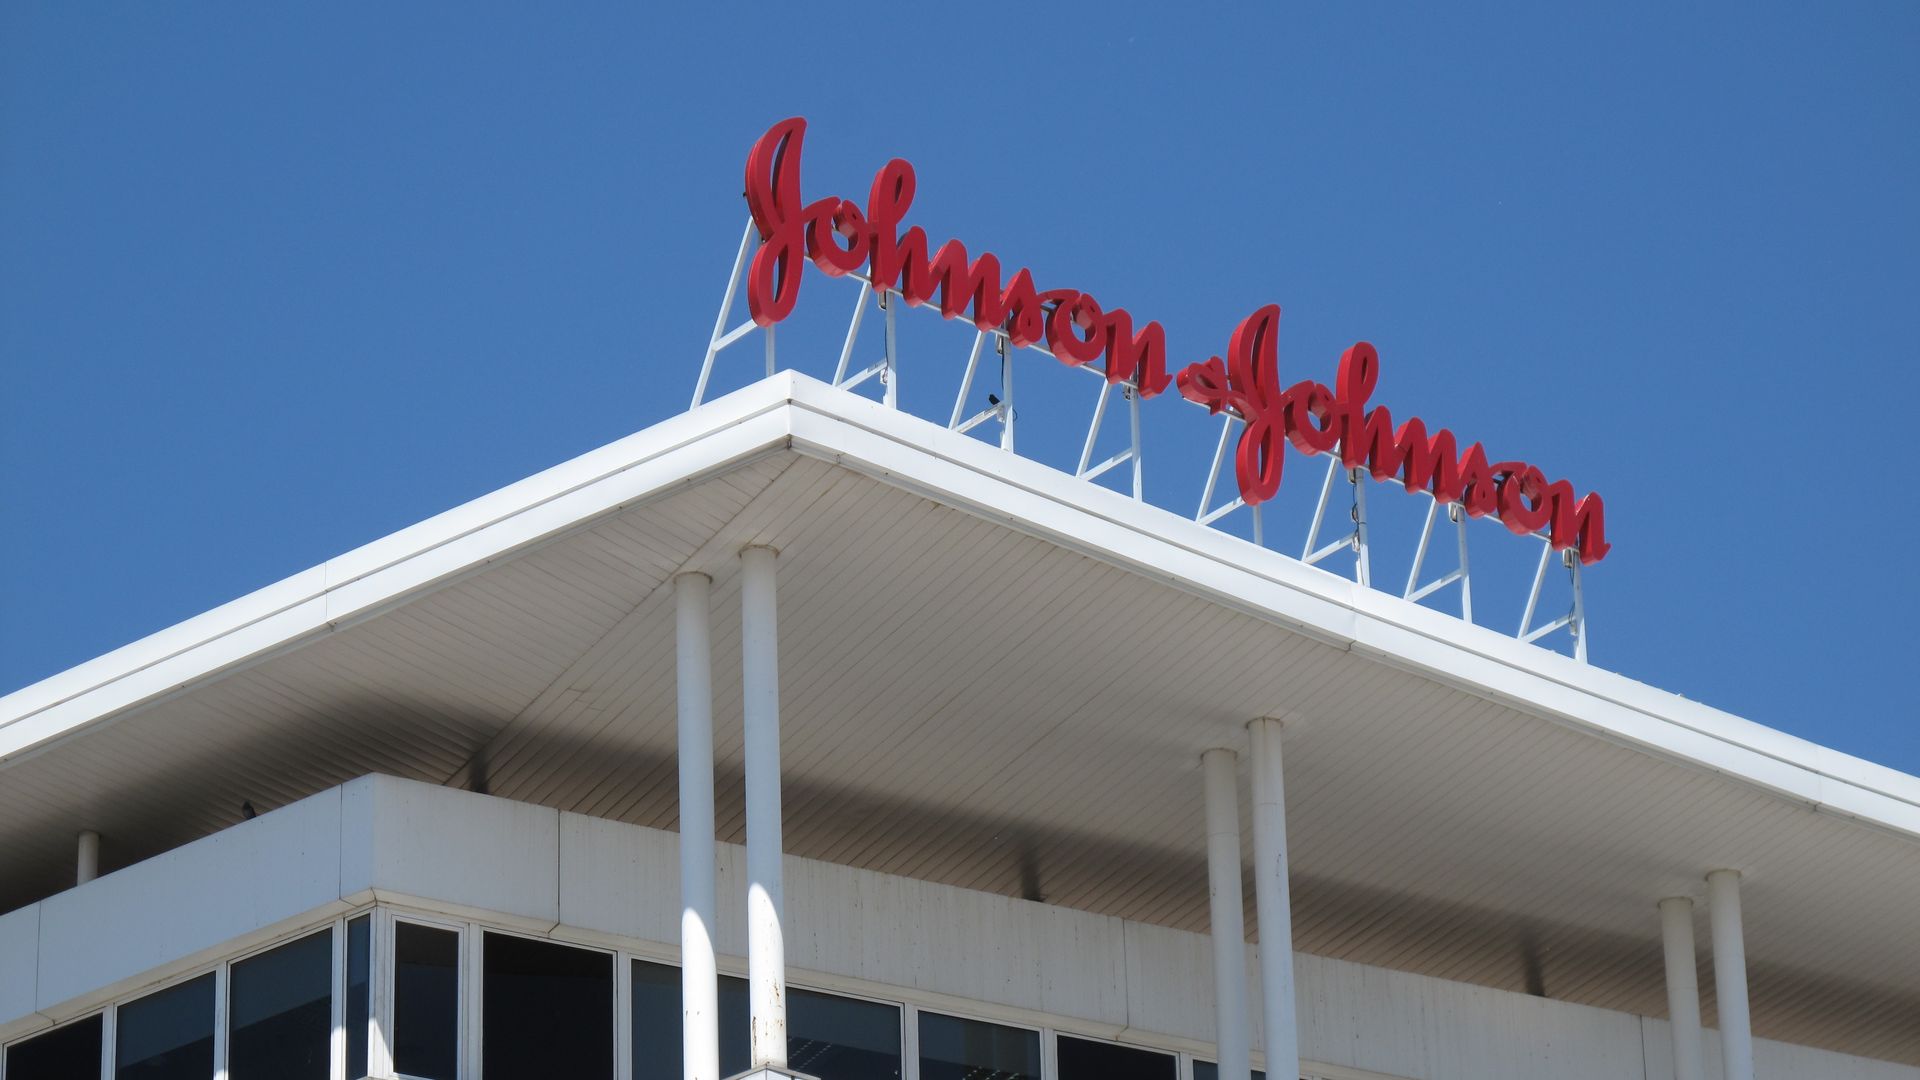 Johnson & Johnson logo on top of a building.